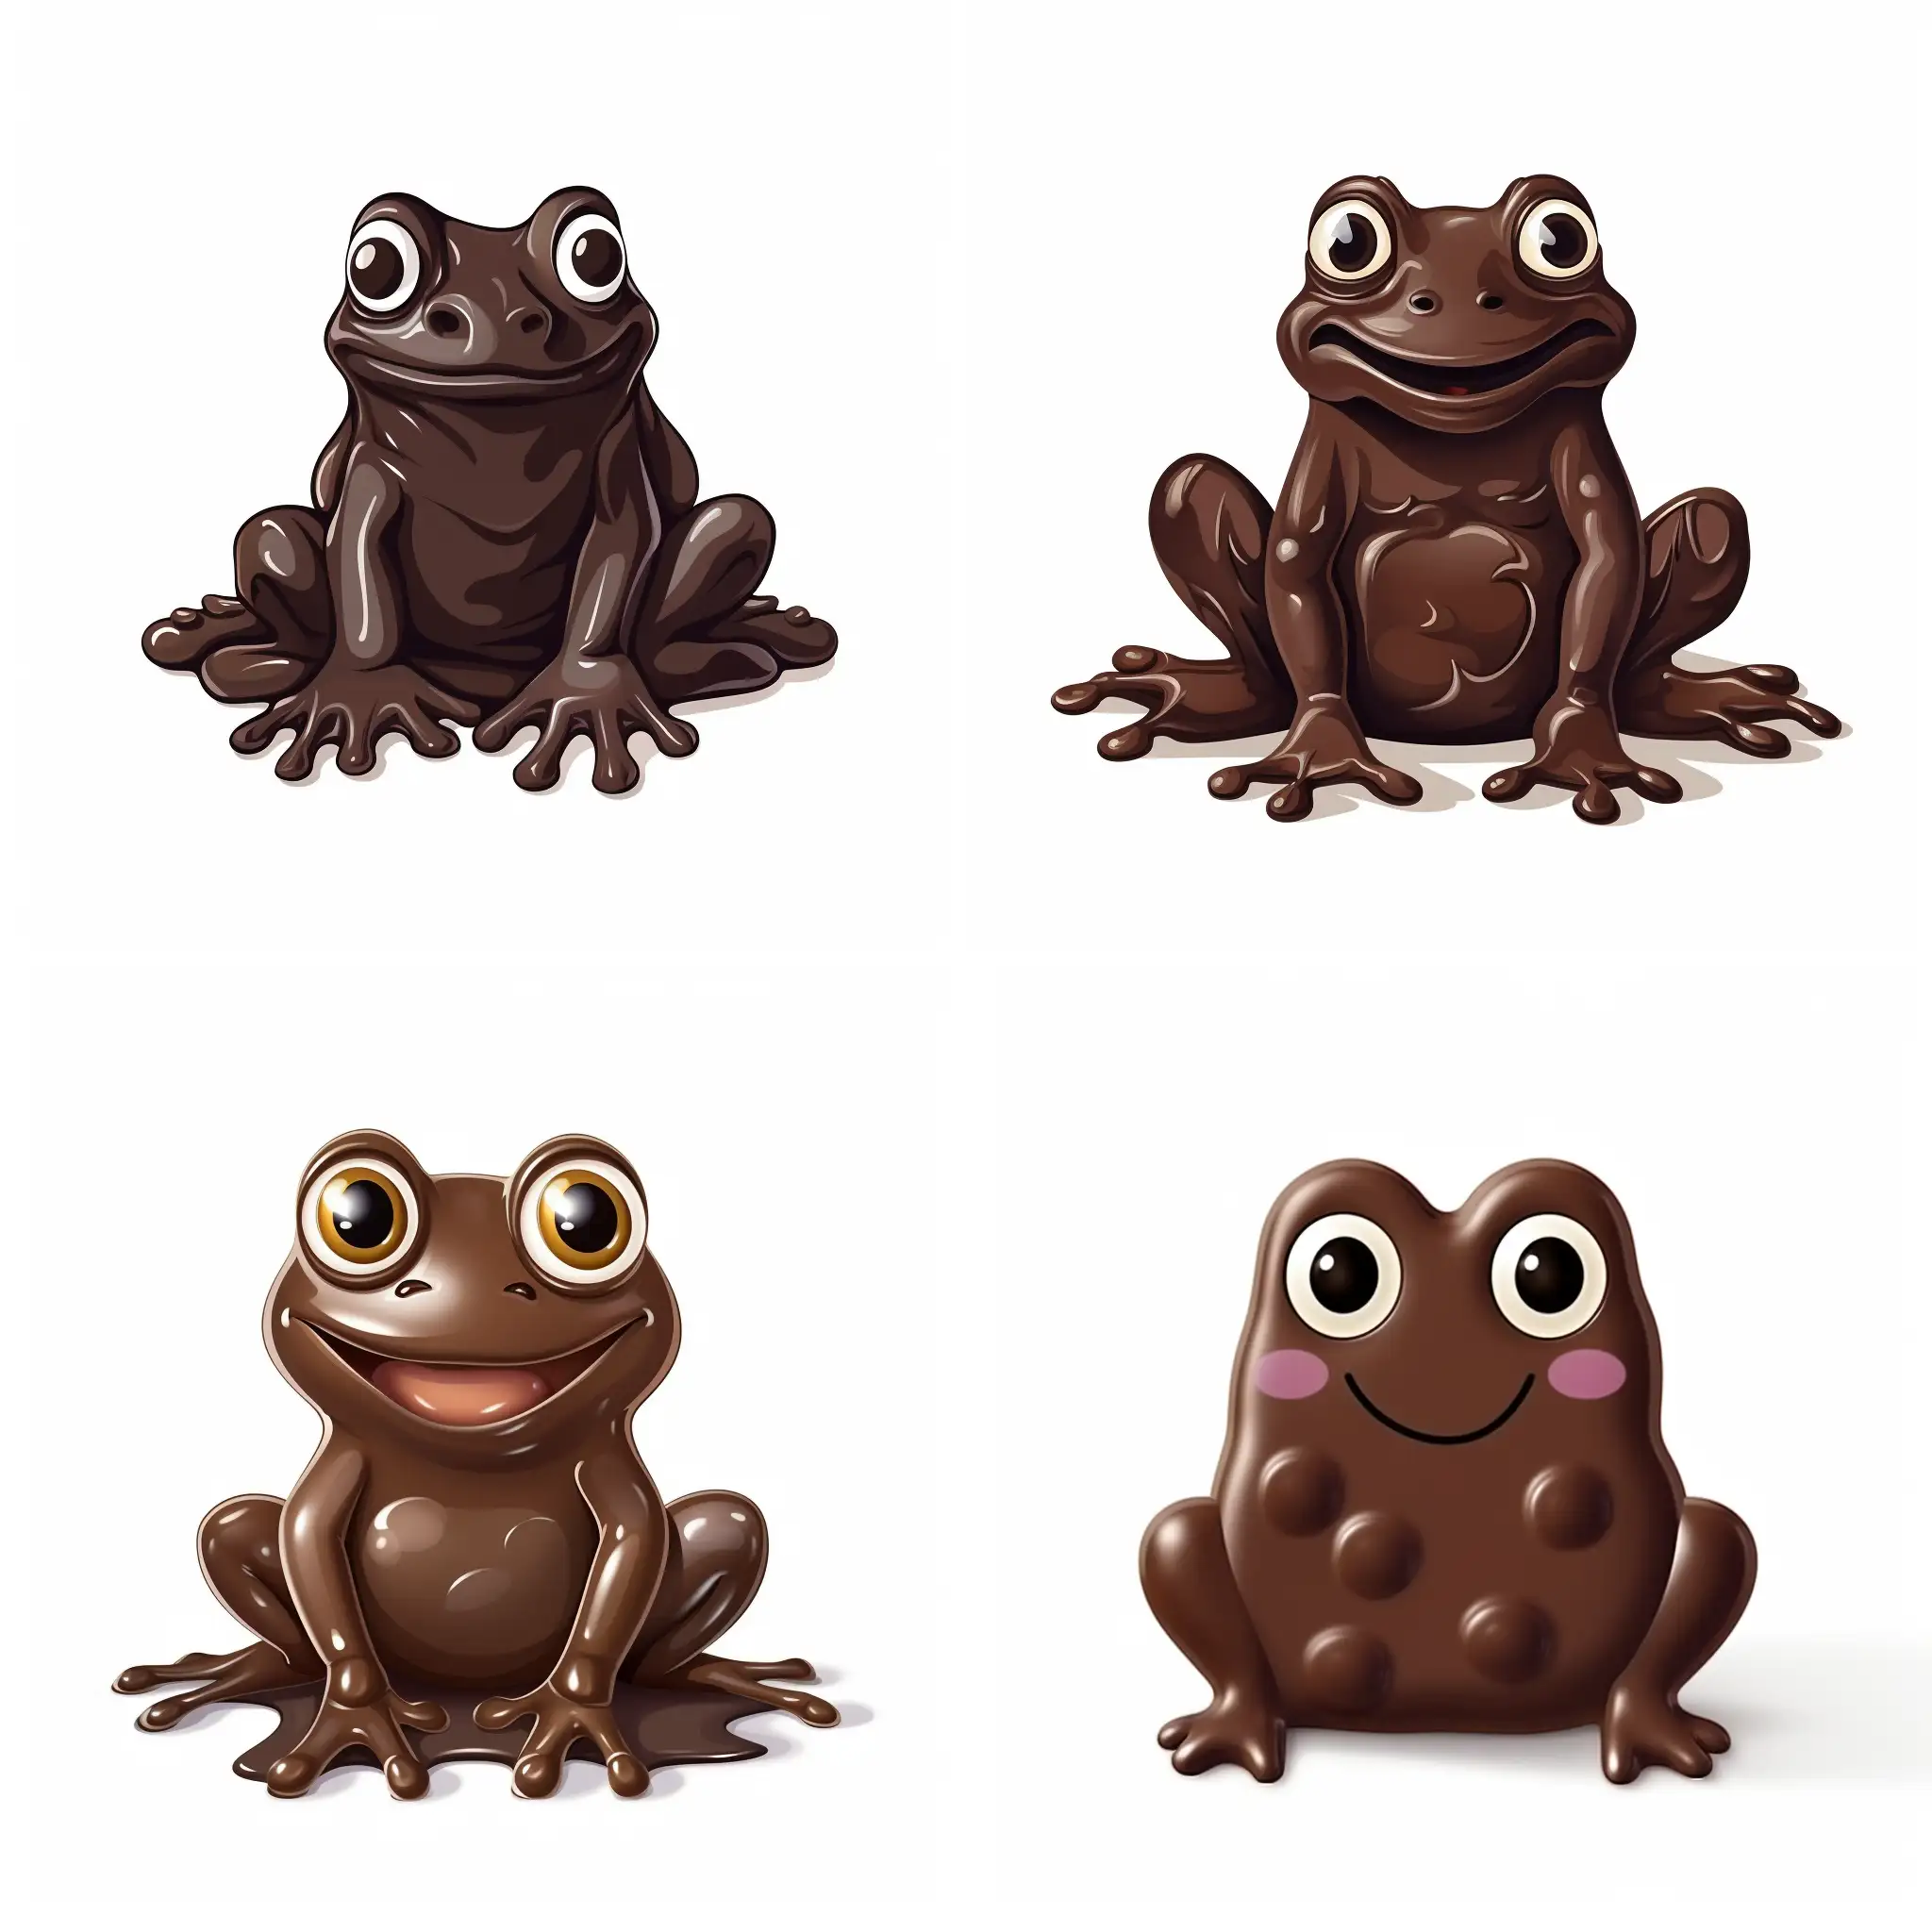 Frog made of dark chocolate on white background, cartoon style, illustration